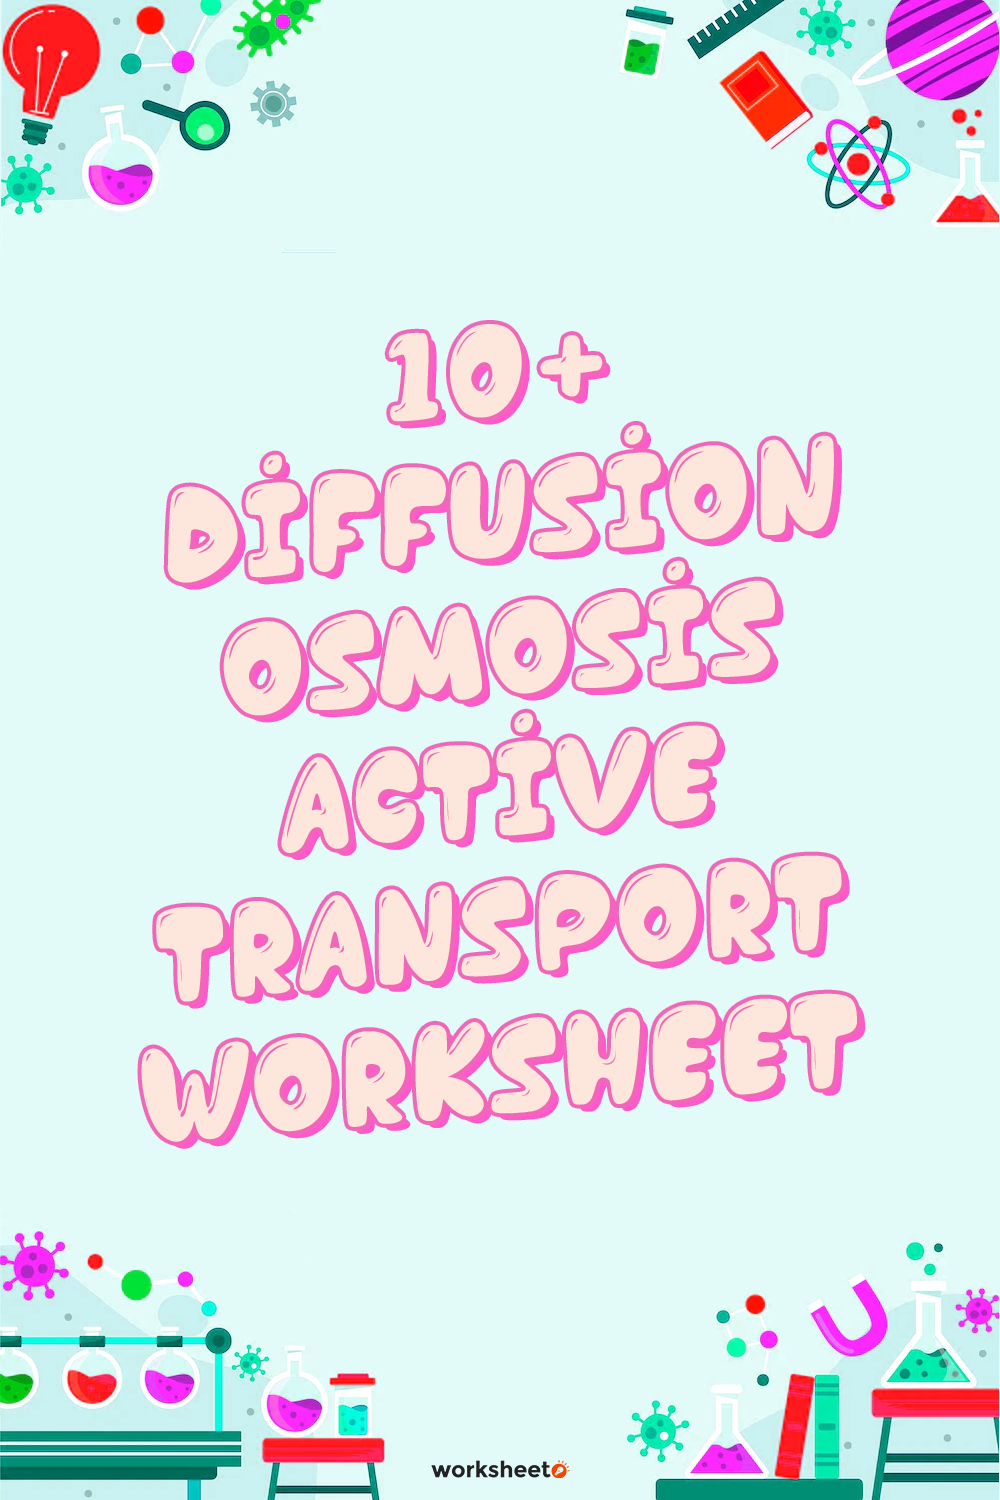 Diffusion Osmosis Active Transport Worksheet